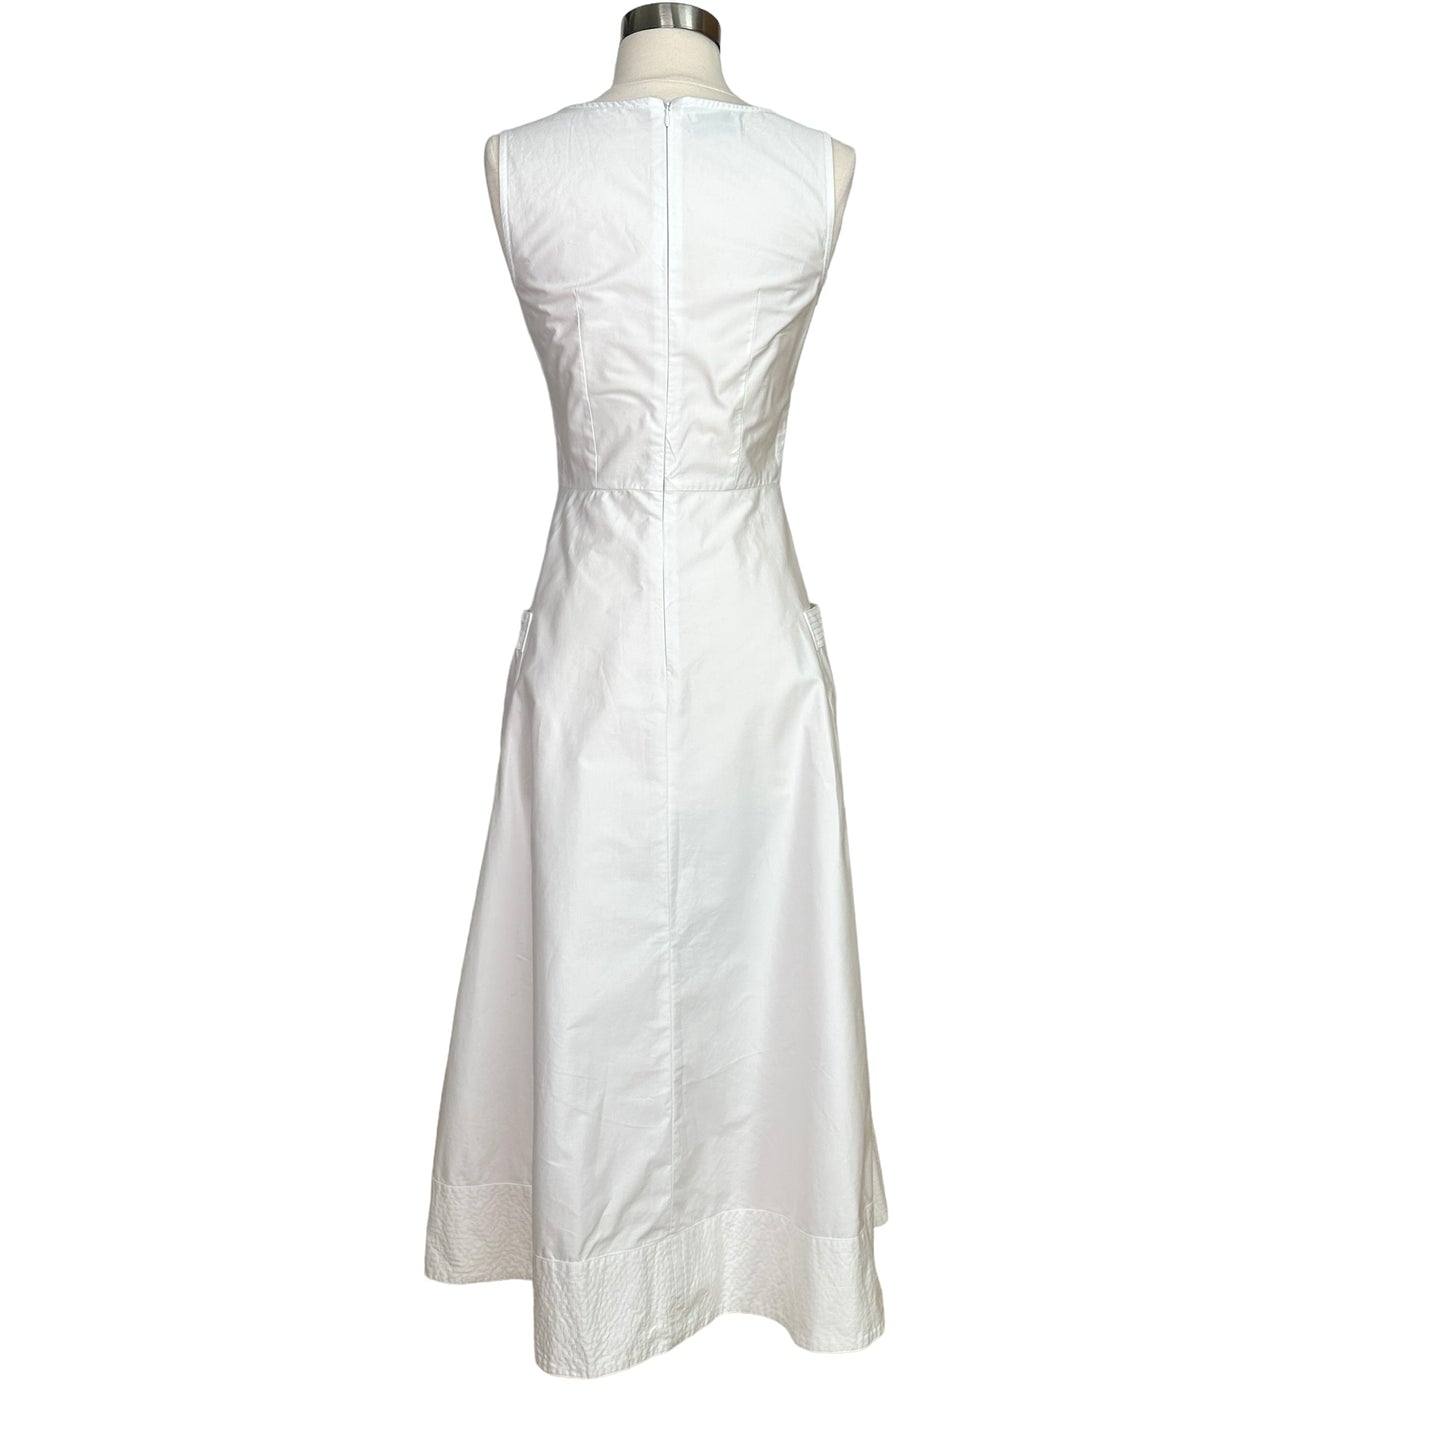 White Pockets Dress - XS